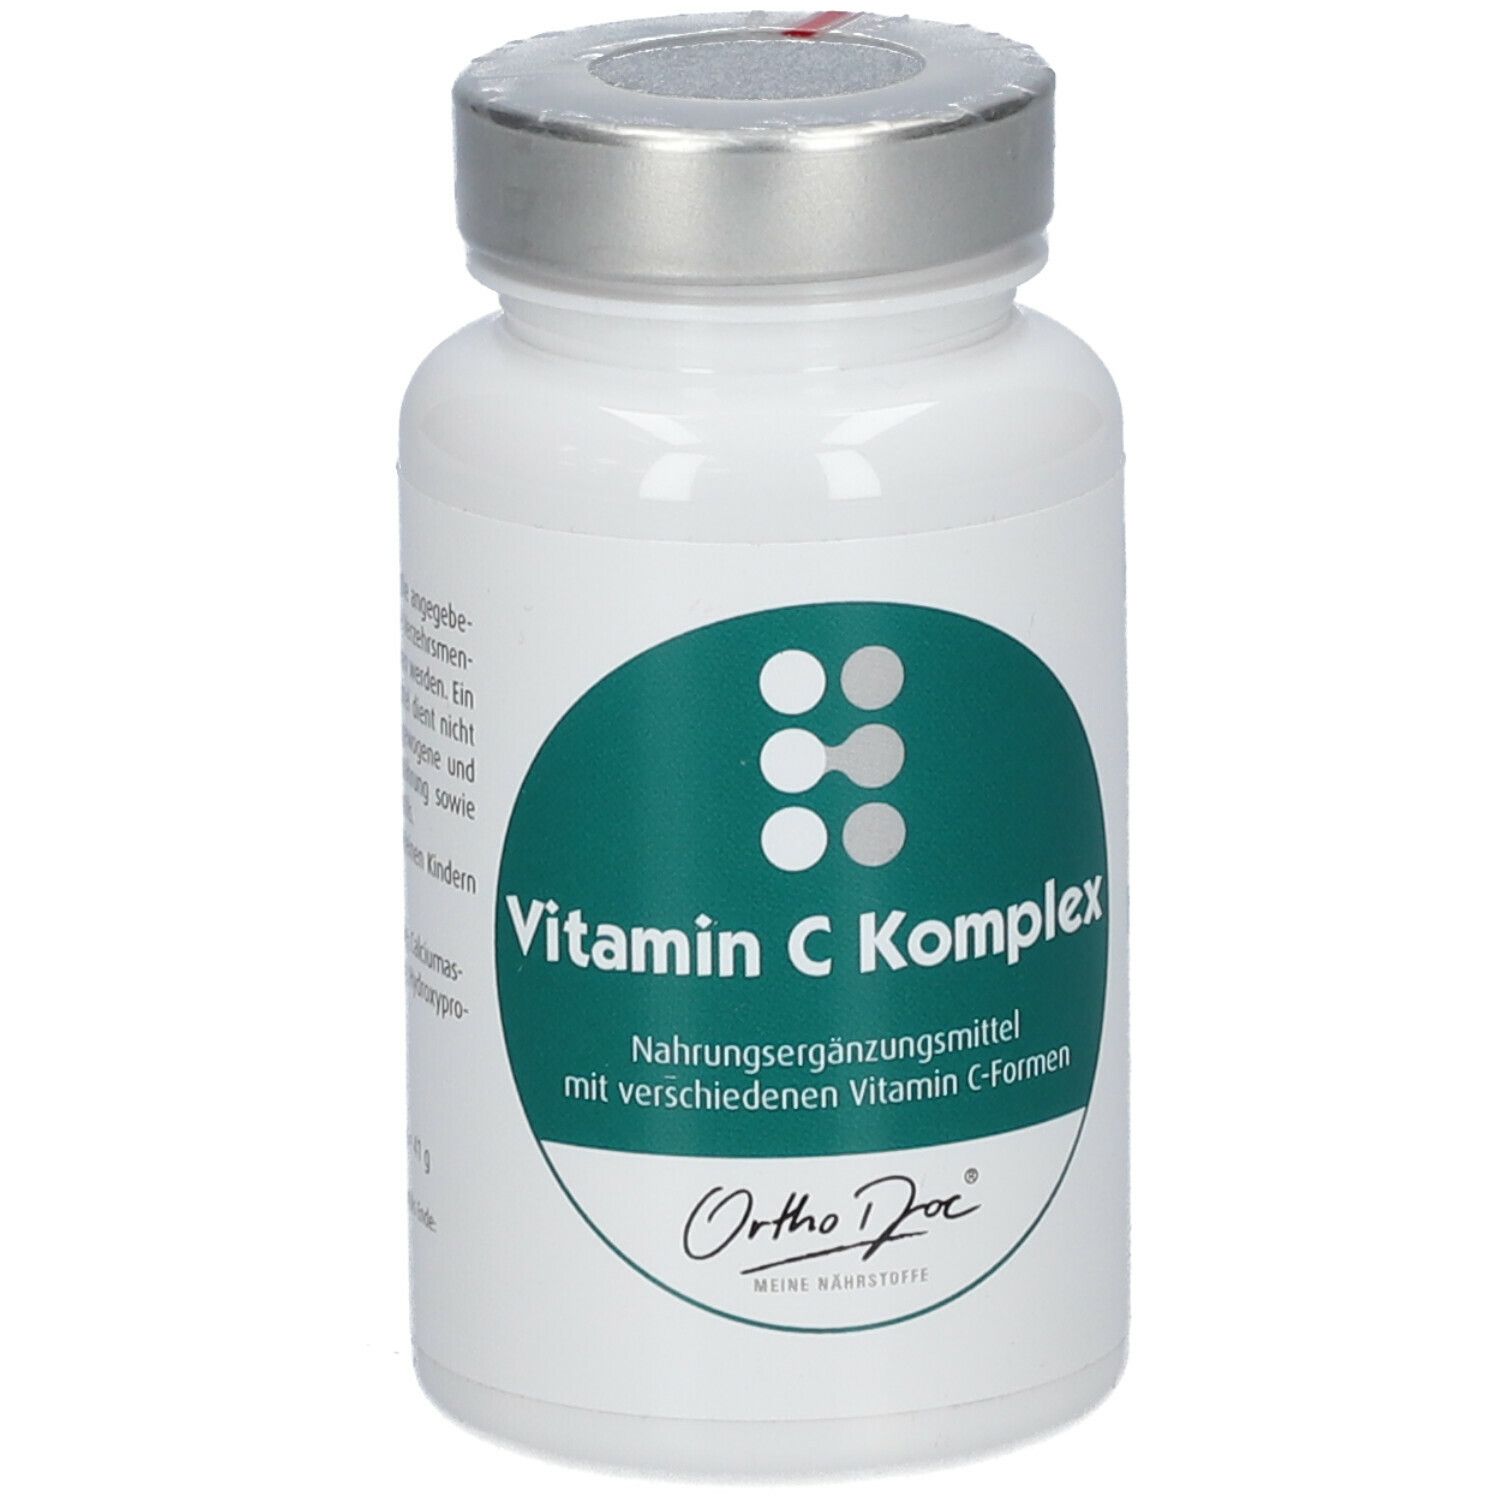 OrthoDoc® Vitamin C Komplex